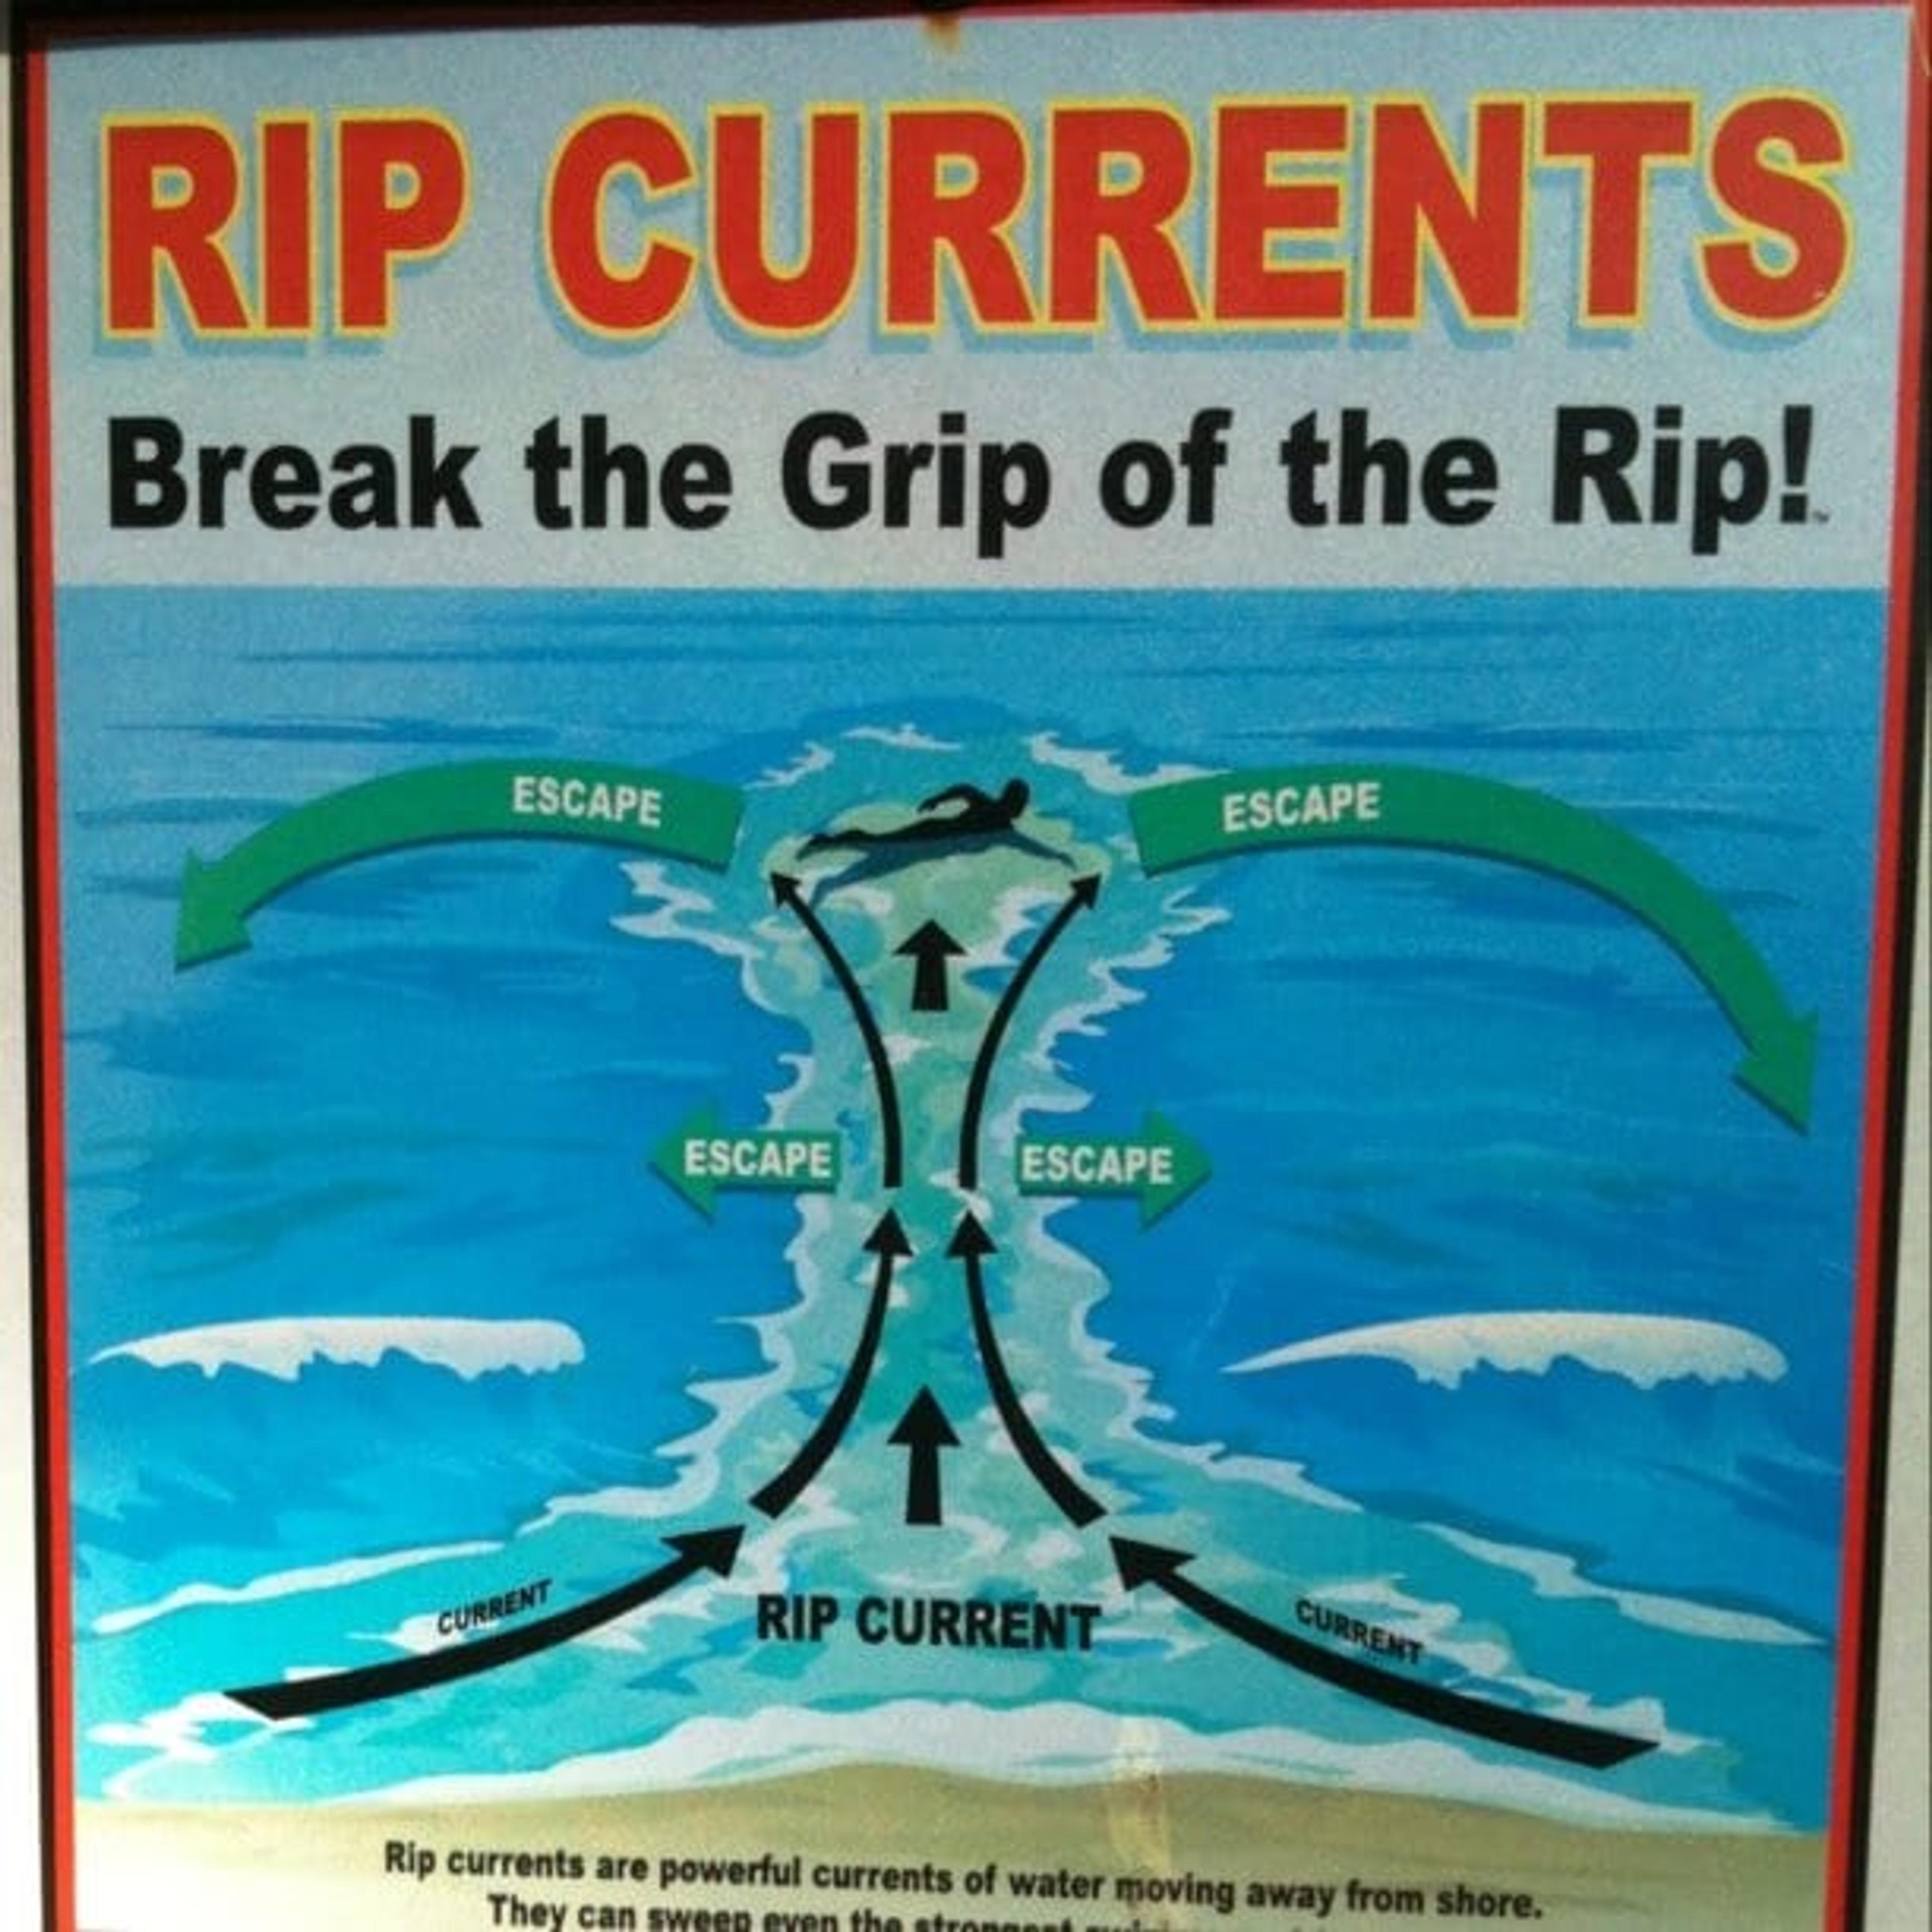 Explaining how to escape a rip current